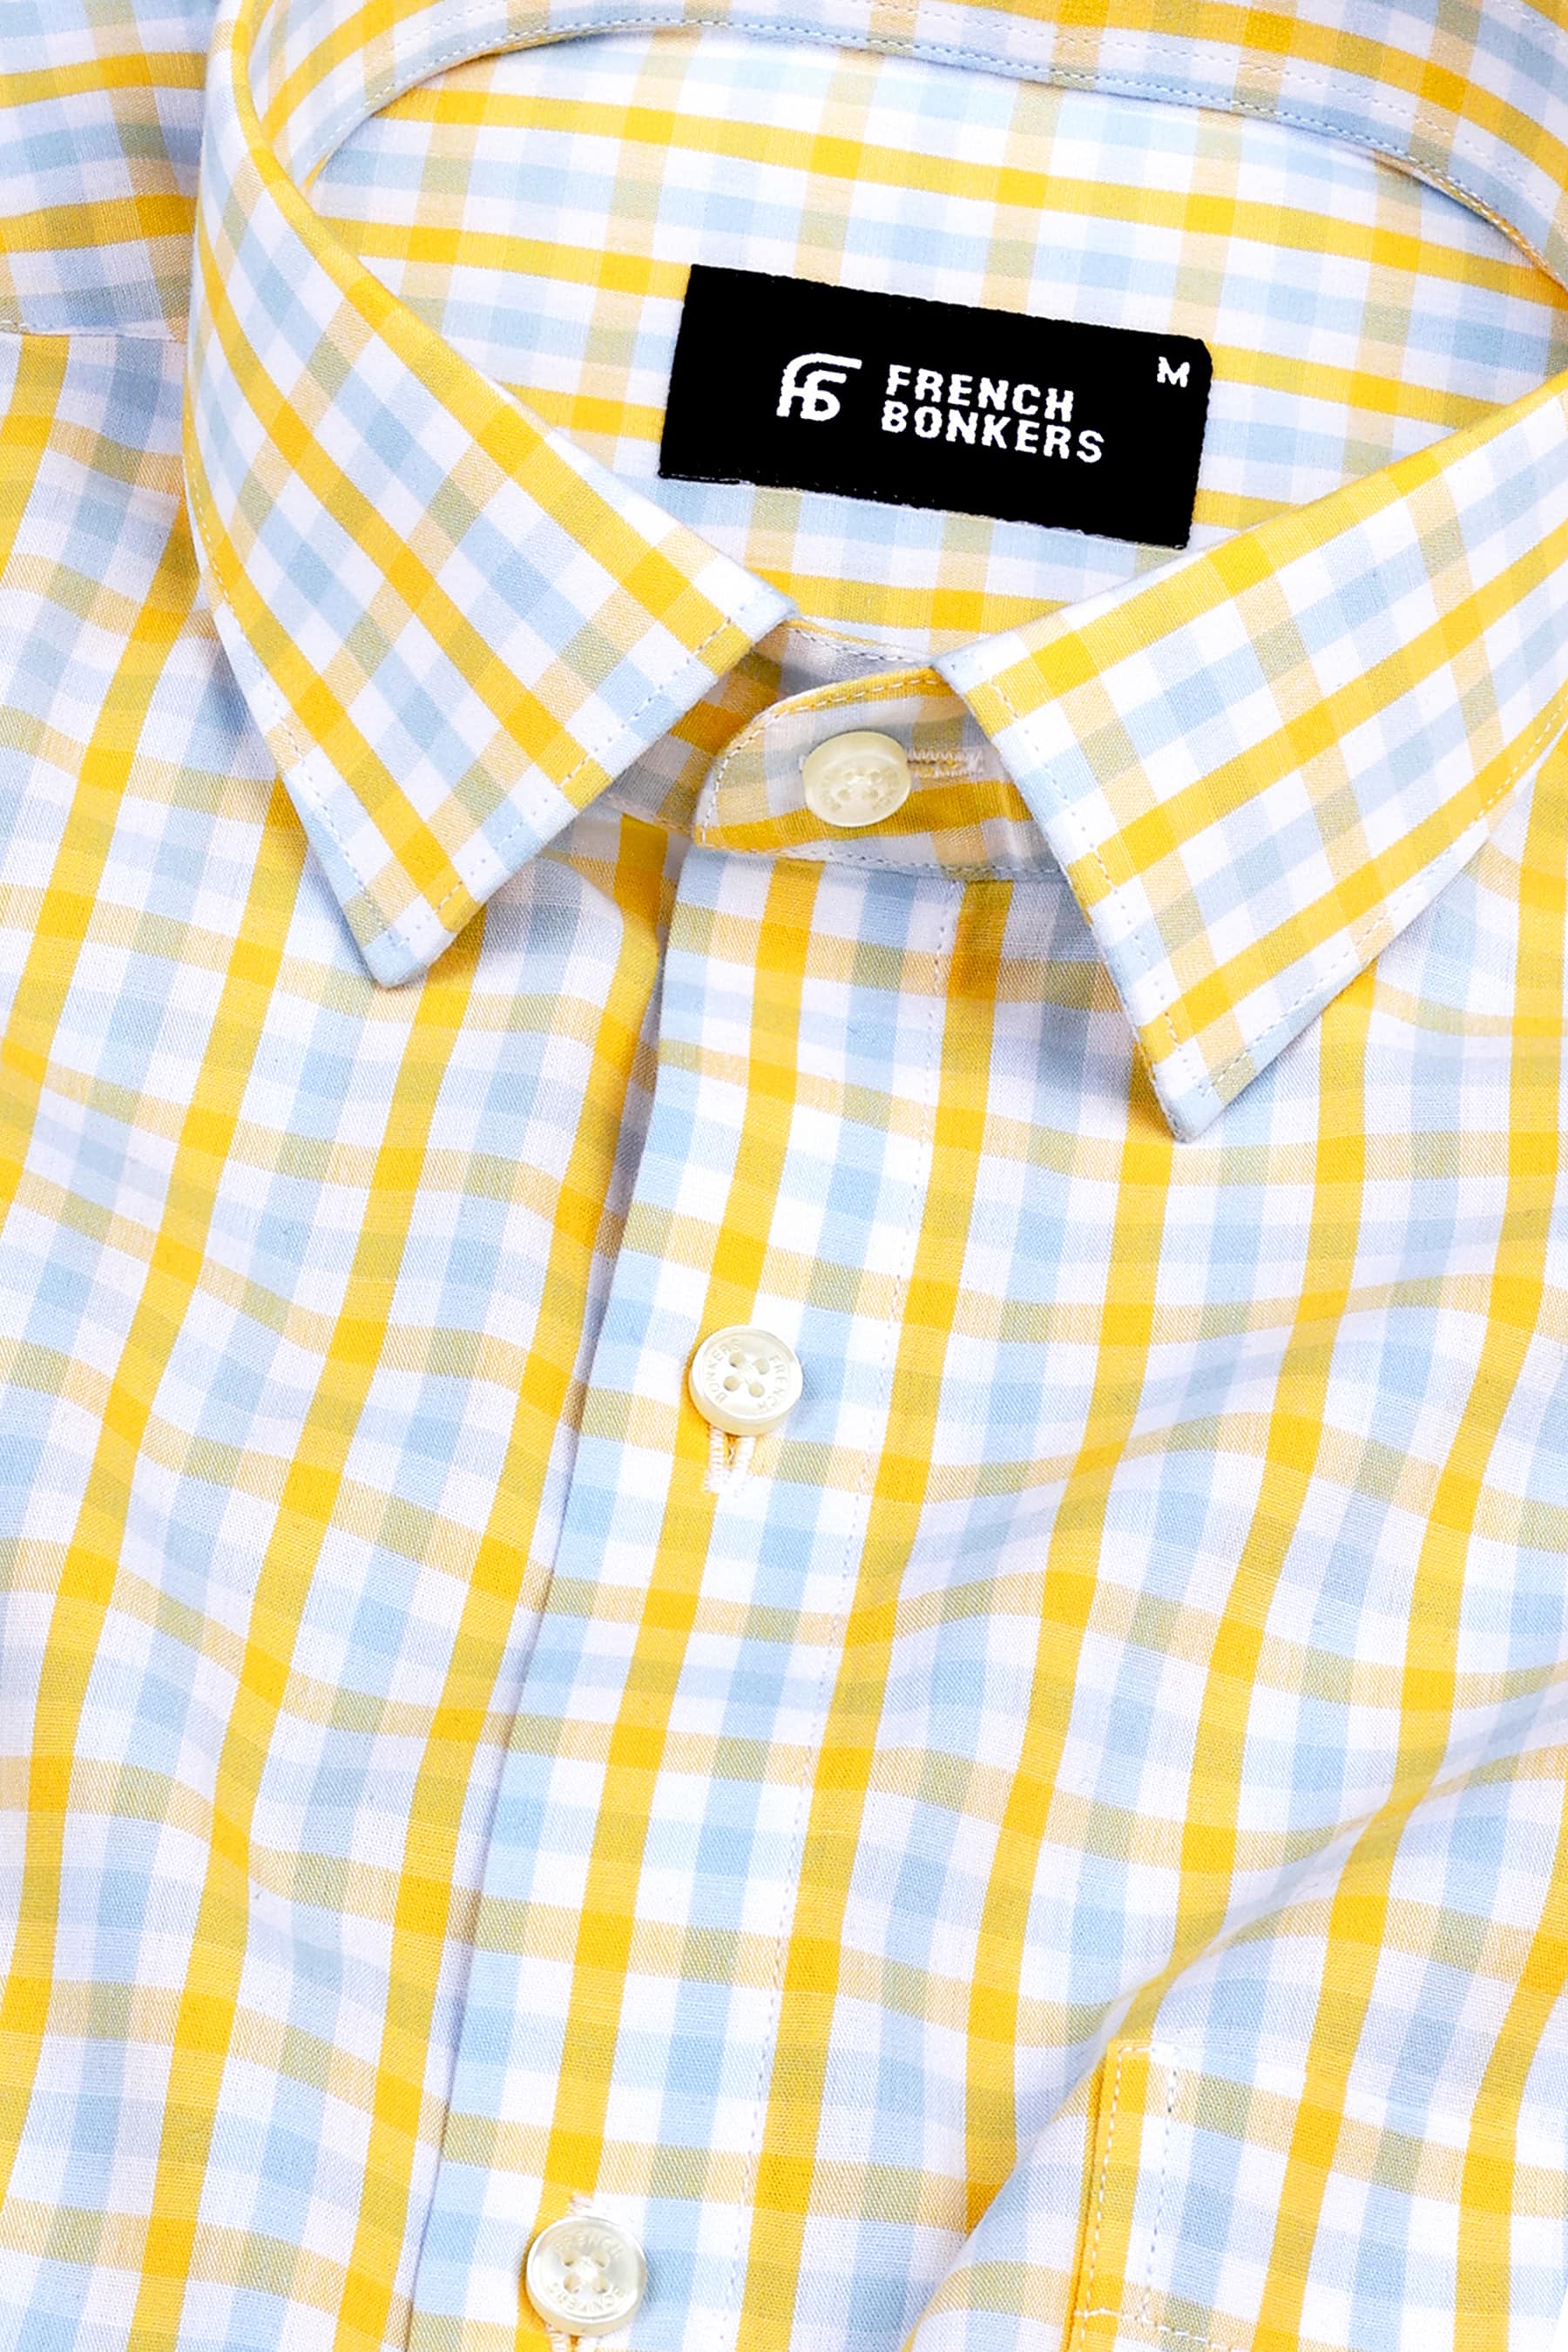 Lemon yellow with light sky blue gun club check shirt